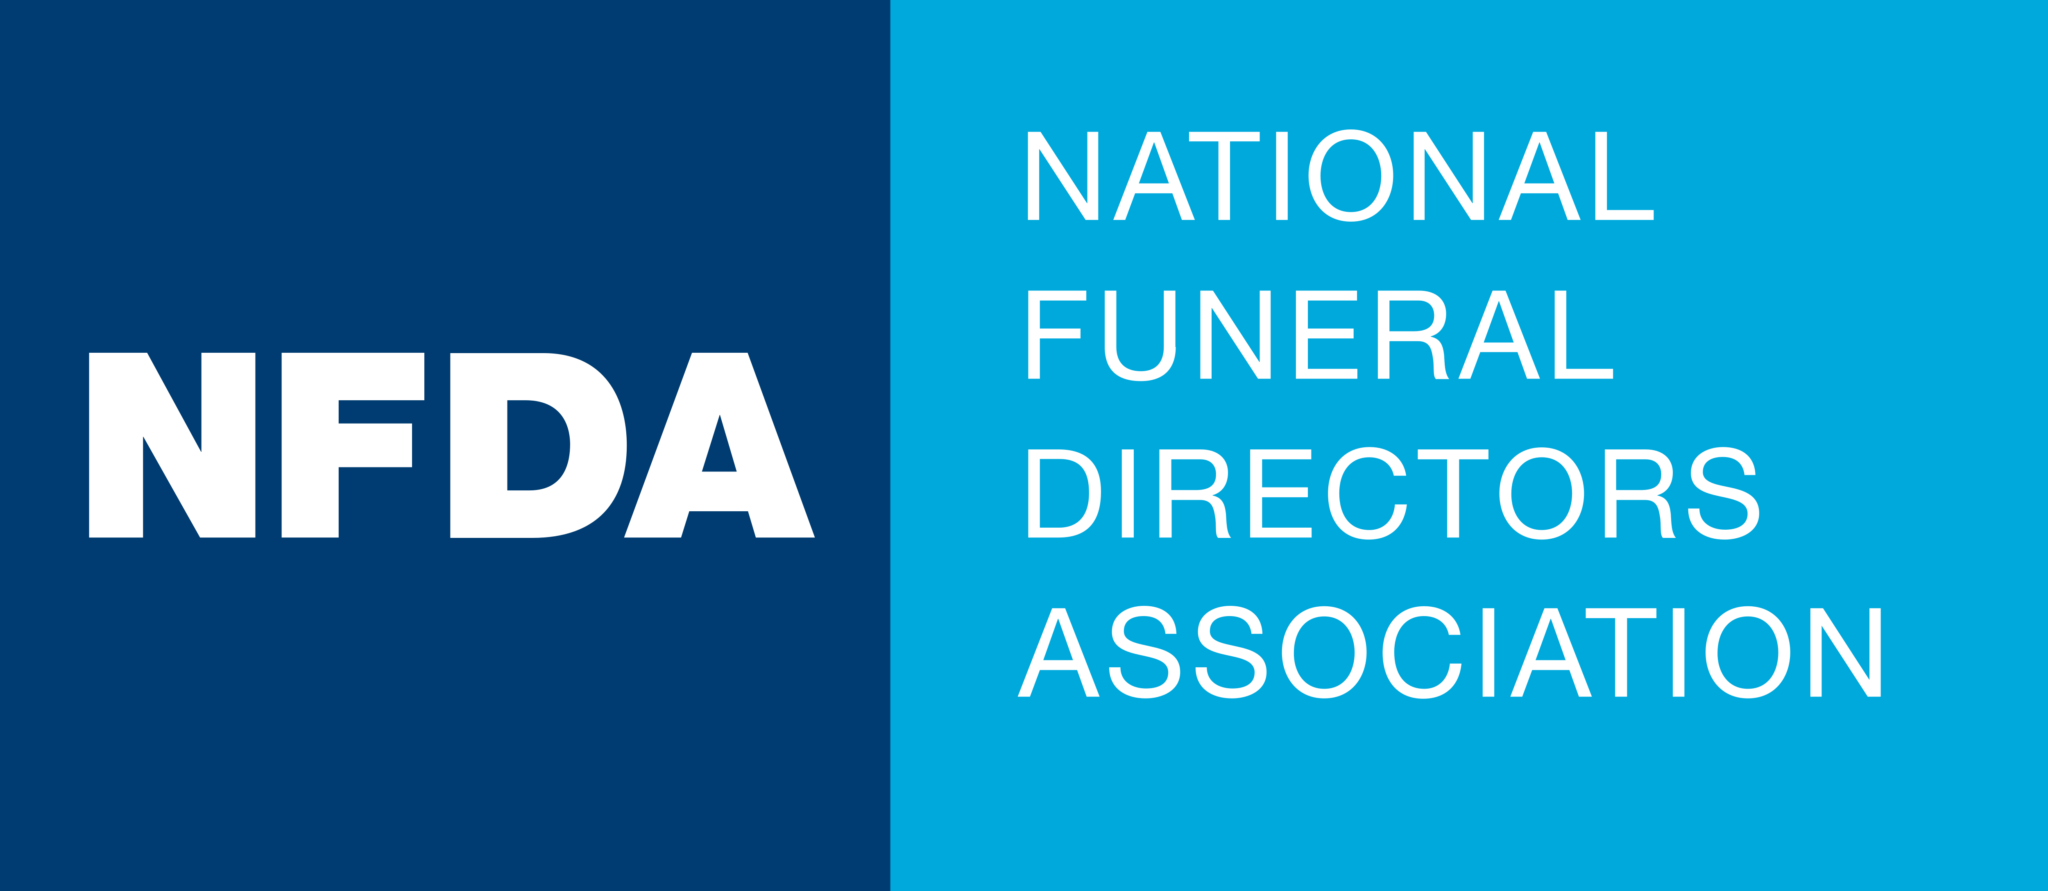 National Funeral Directors Association Logos Download